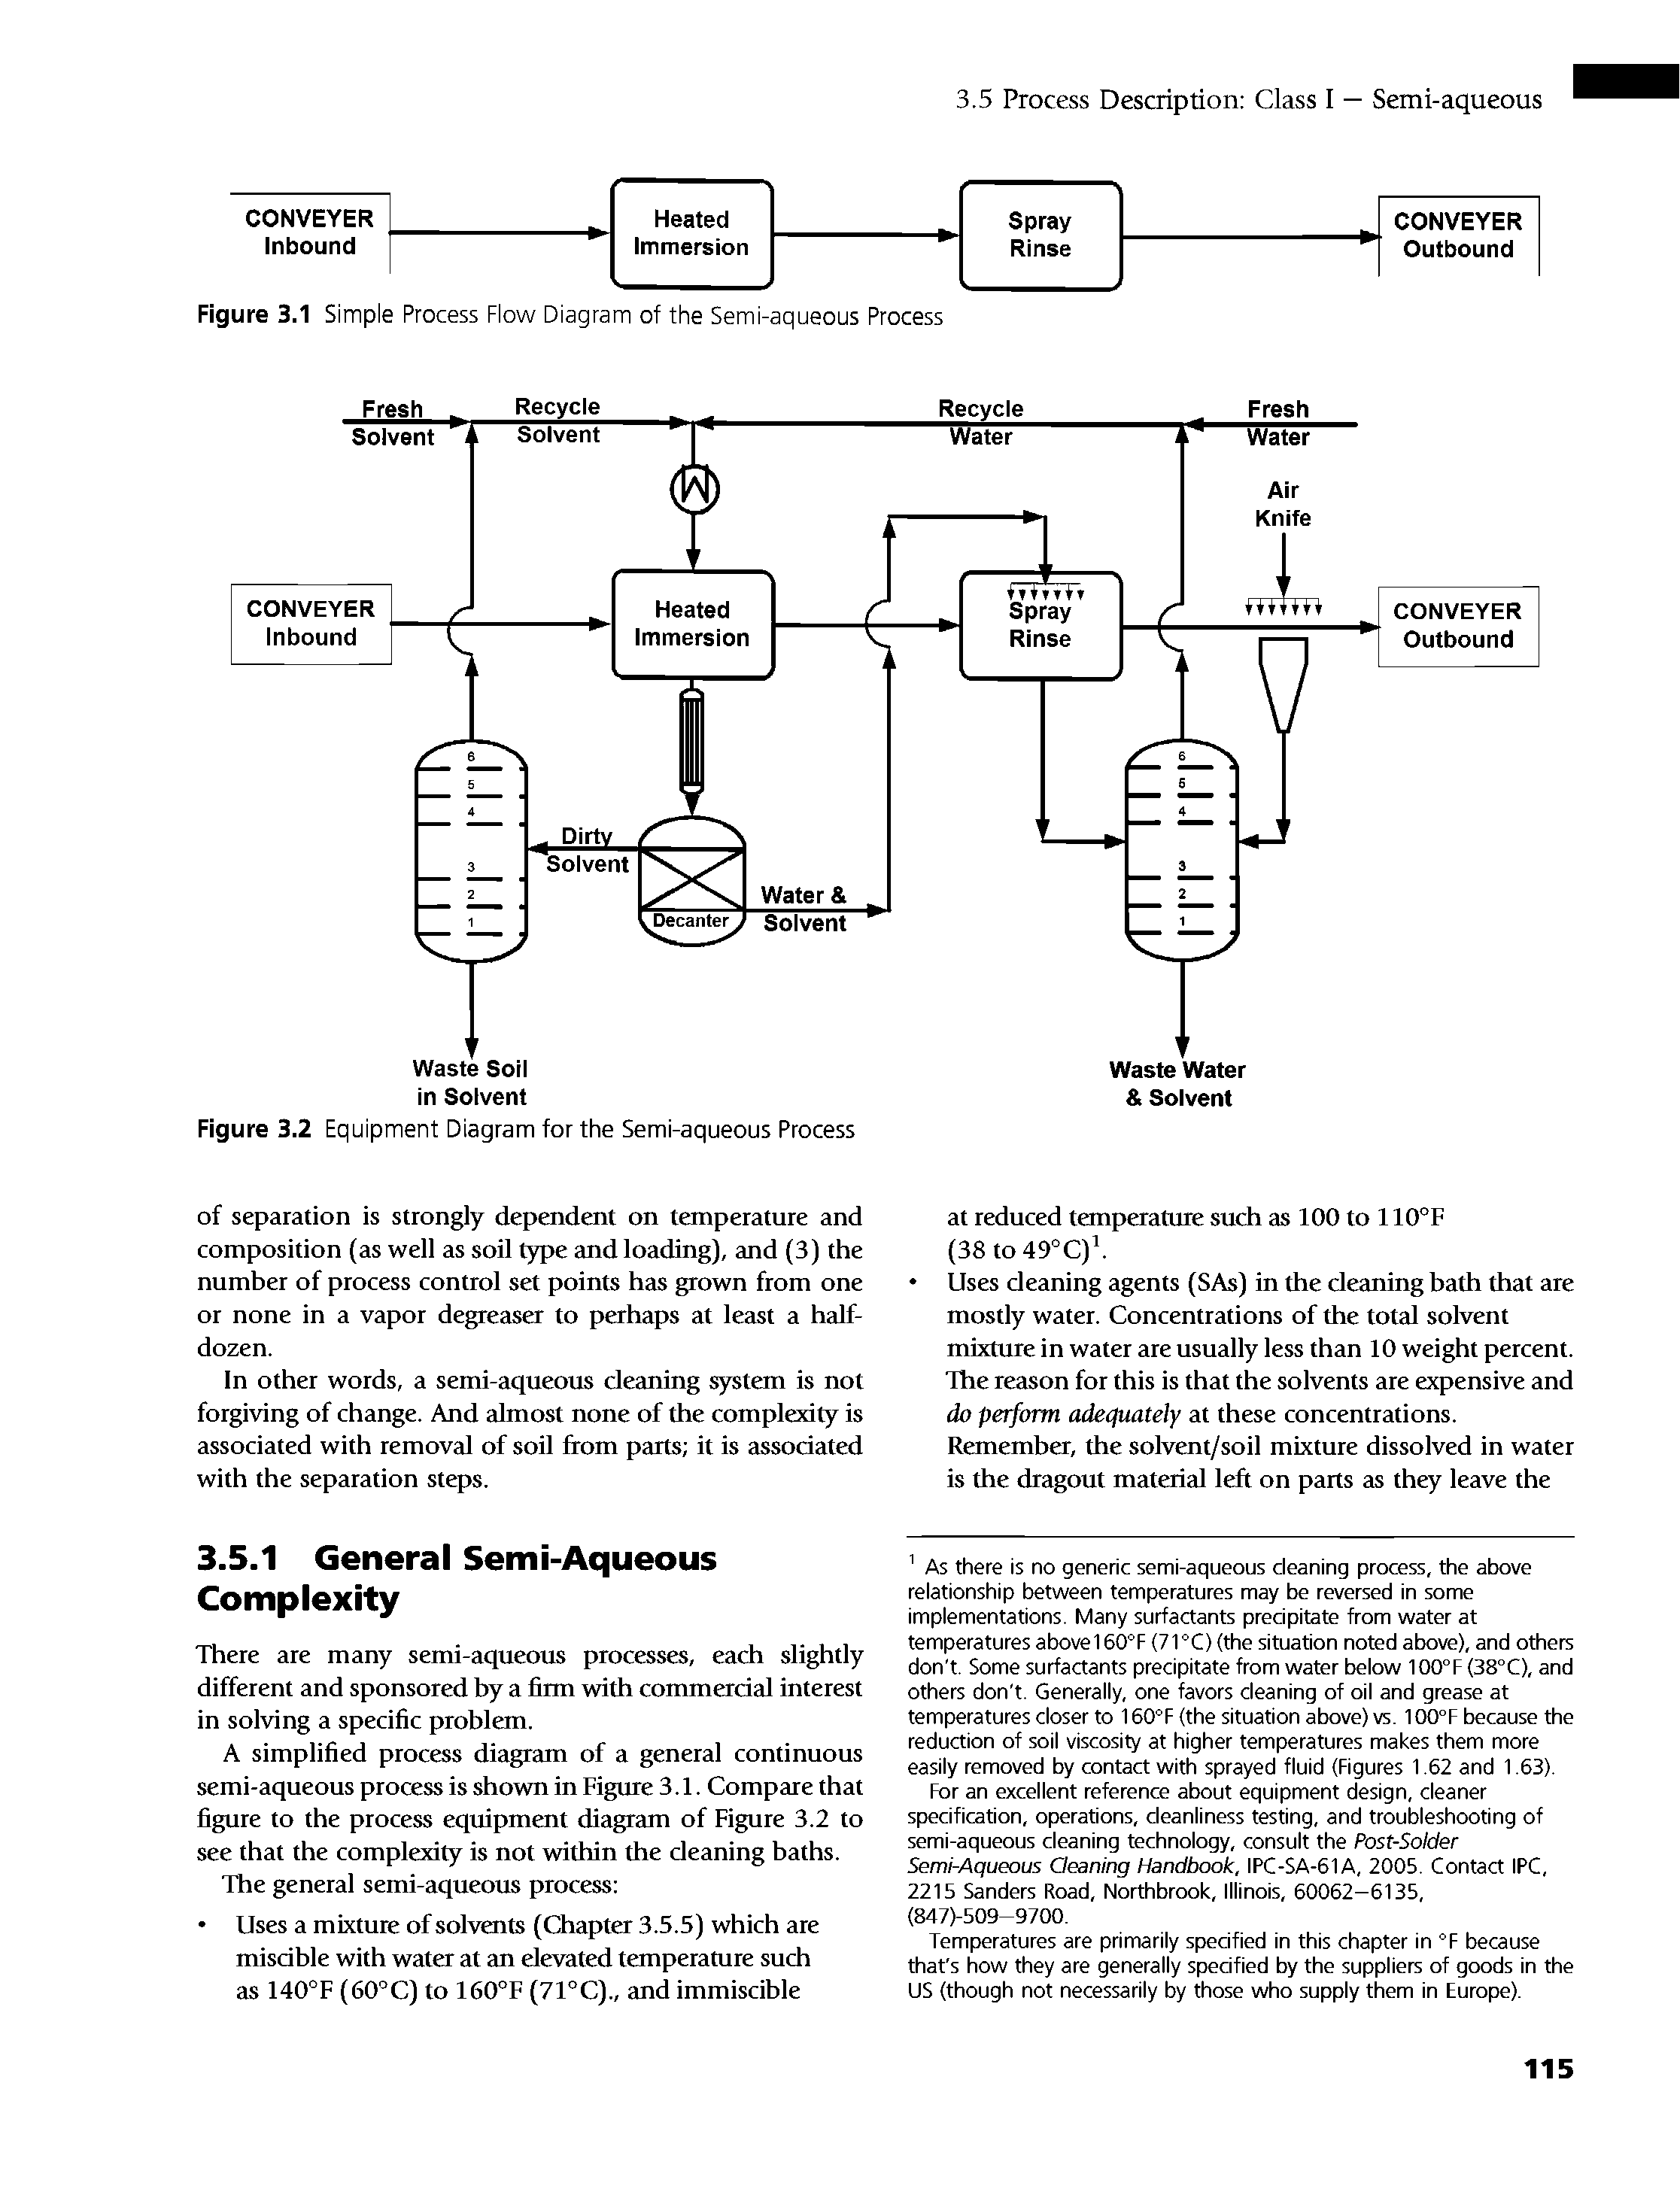 Figure 3.2 Equipment Diagram for the Semi-aqueous Process...